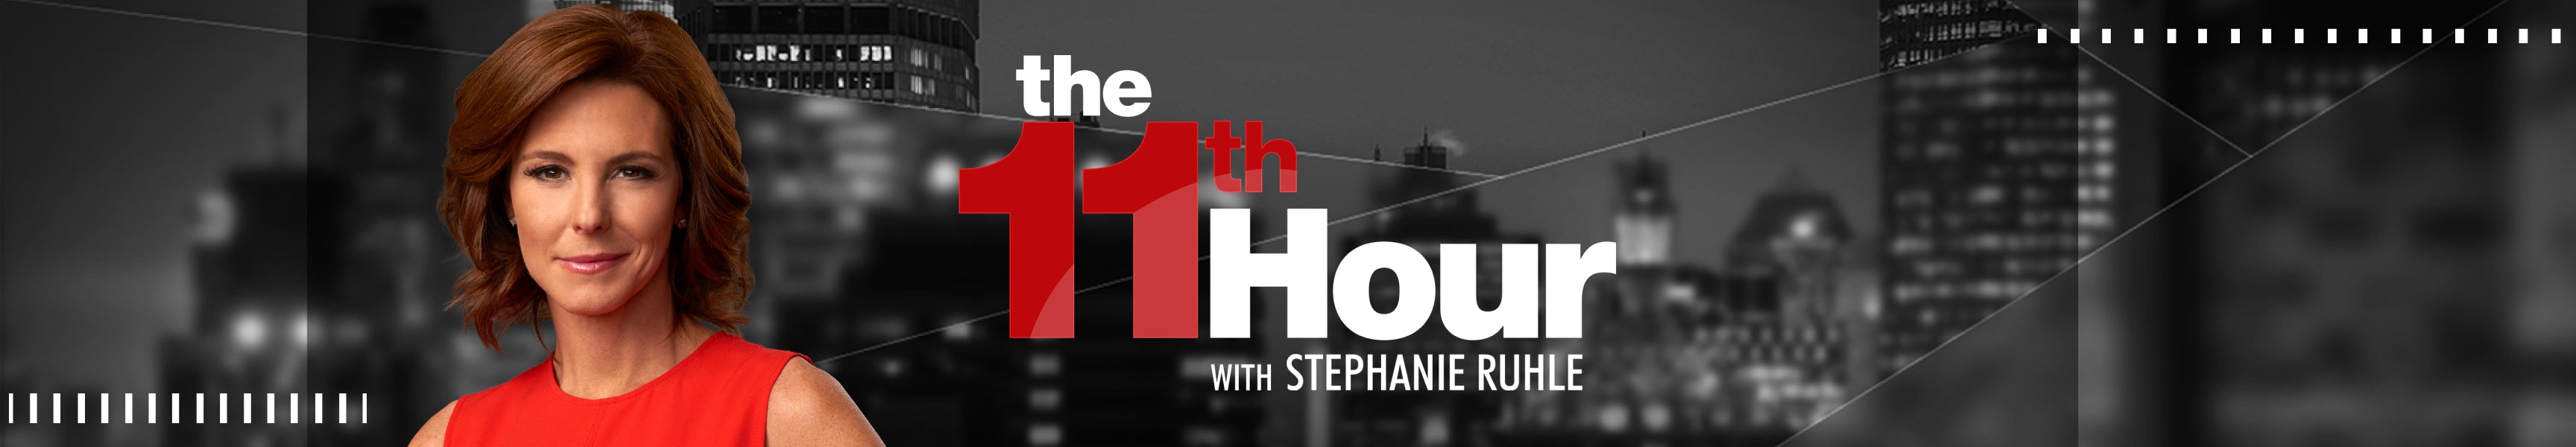 The 11th Hour with Stephanie Ruhle